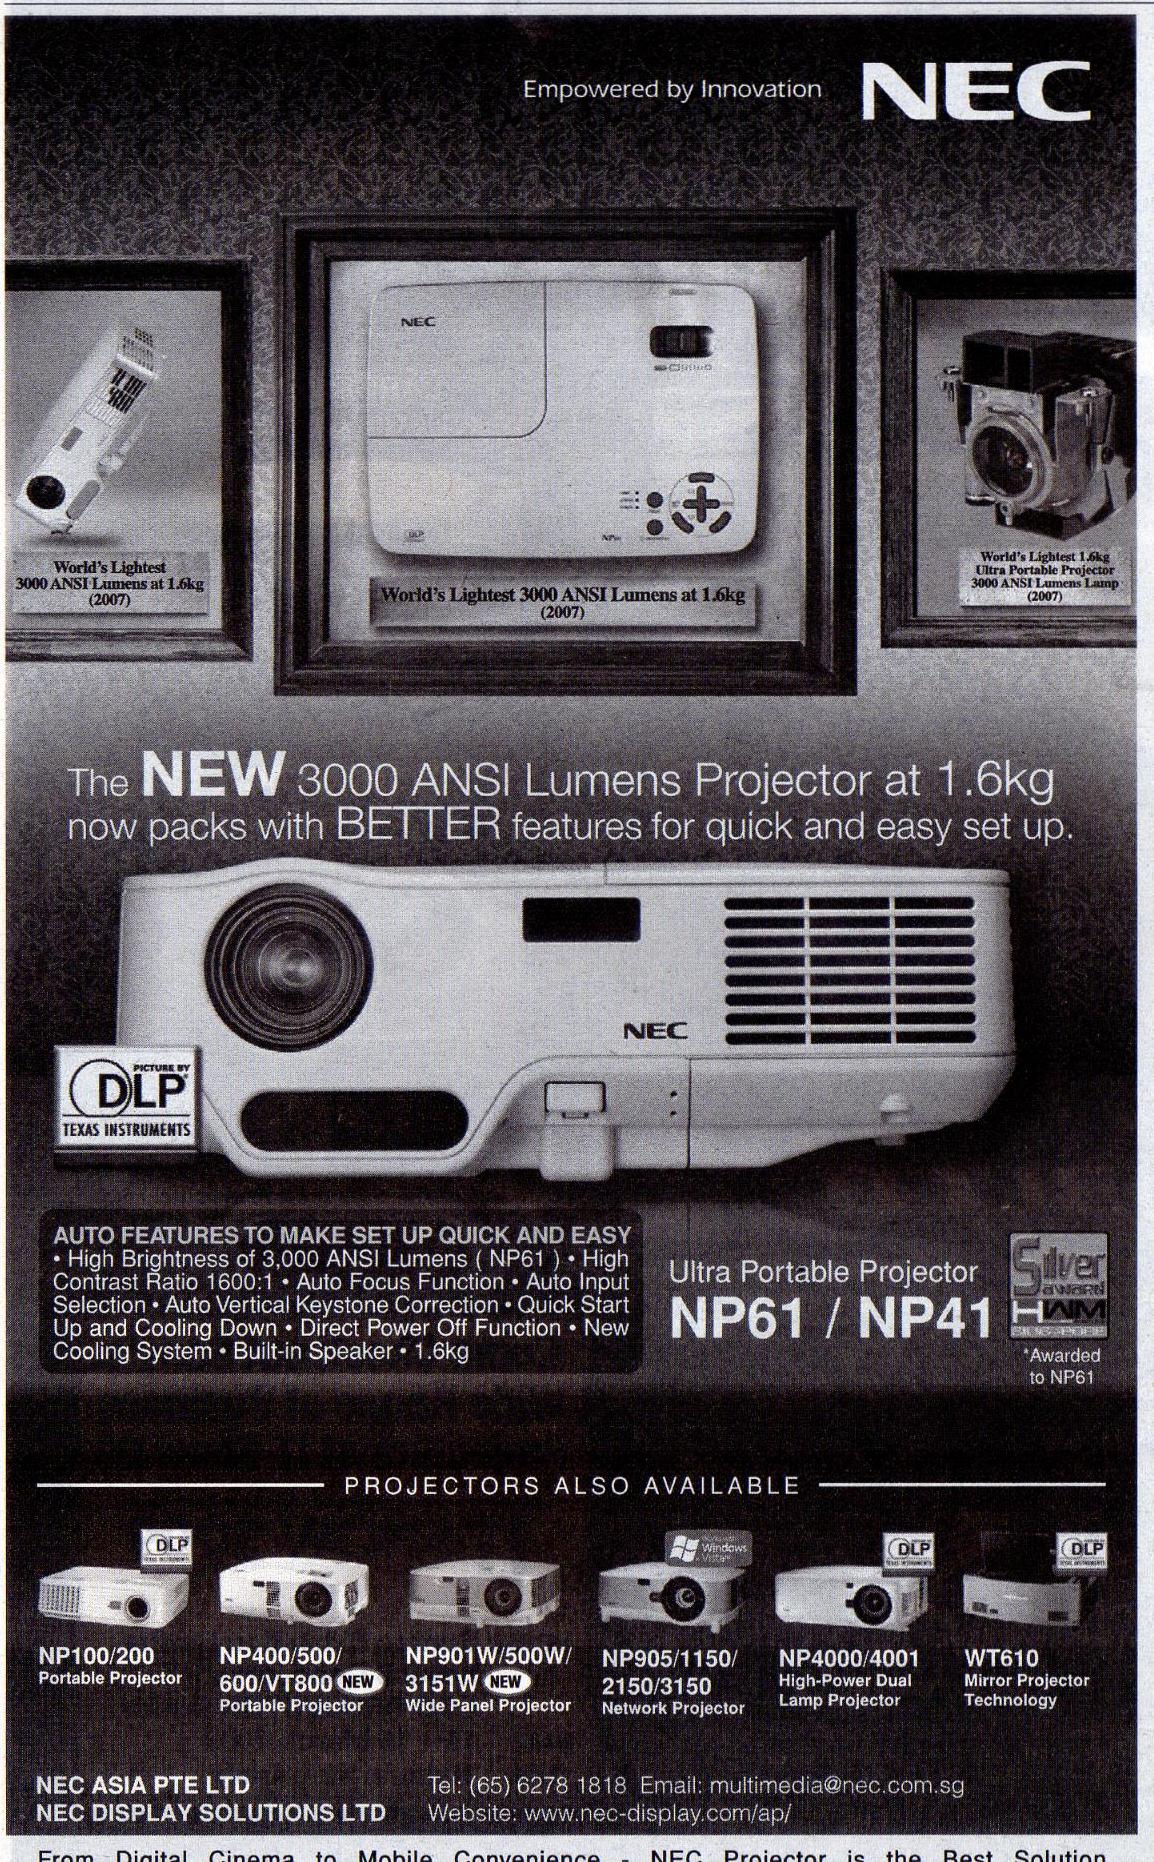 IT Show 2009 price list image brochure of Nec Projectors (coldfreeze)